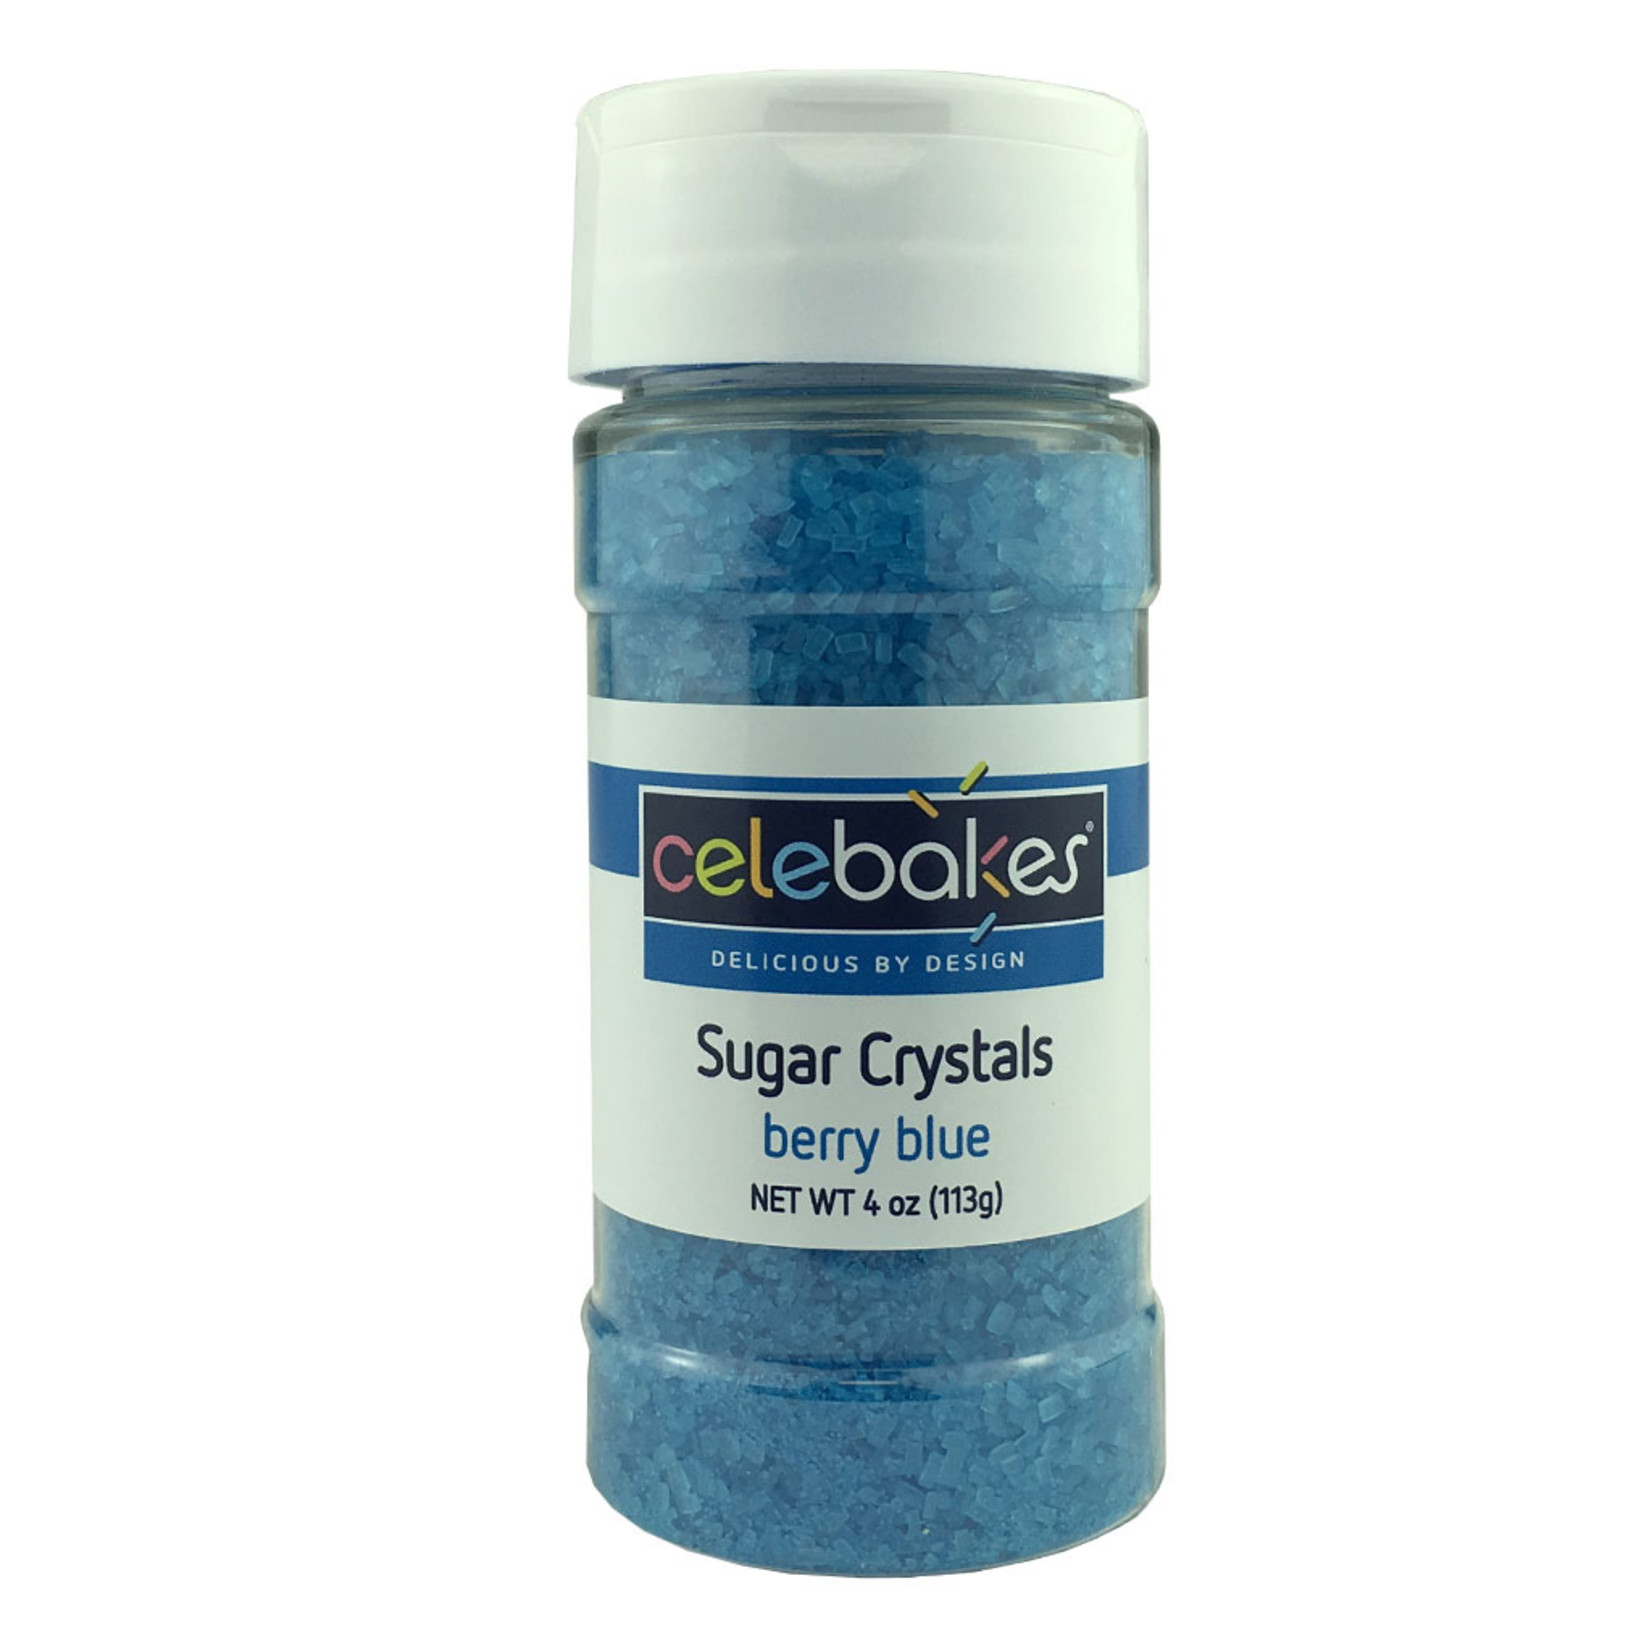 TWS Celebakes Berry Blue Sugar Crystals, 4 oz.